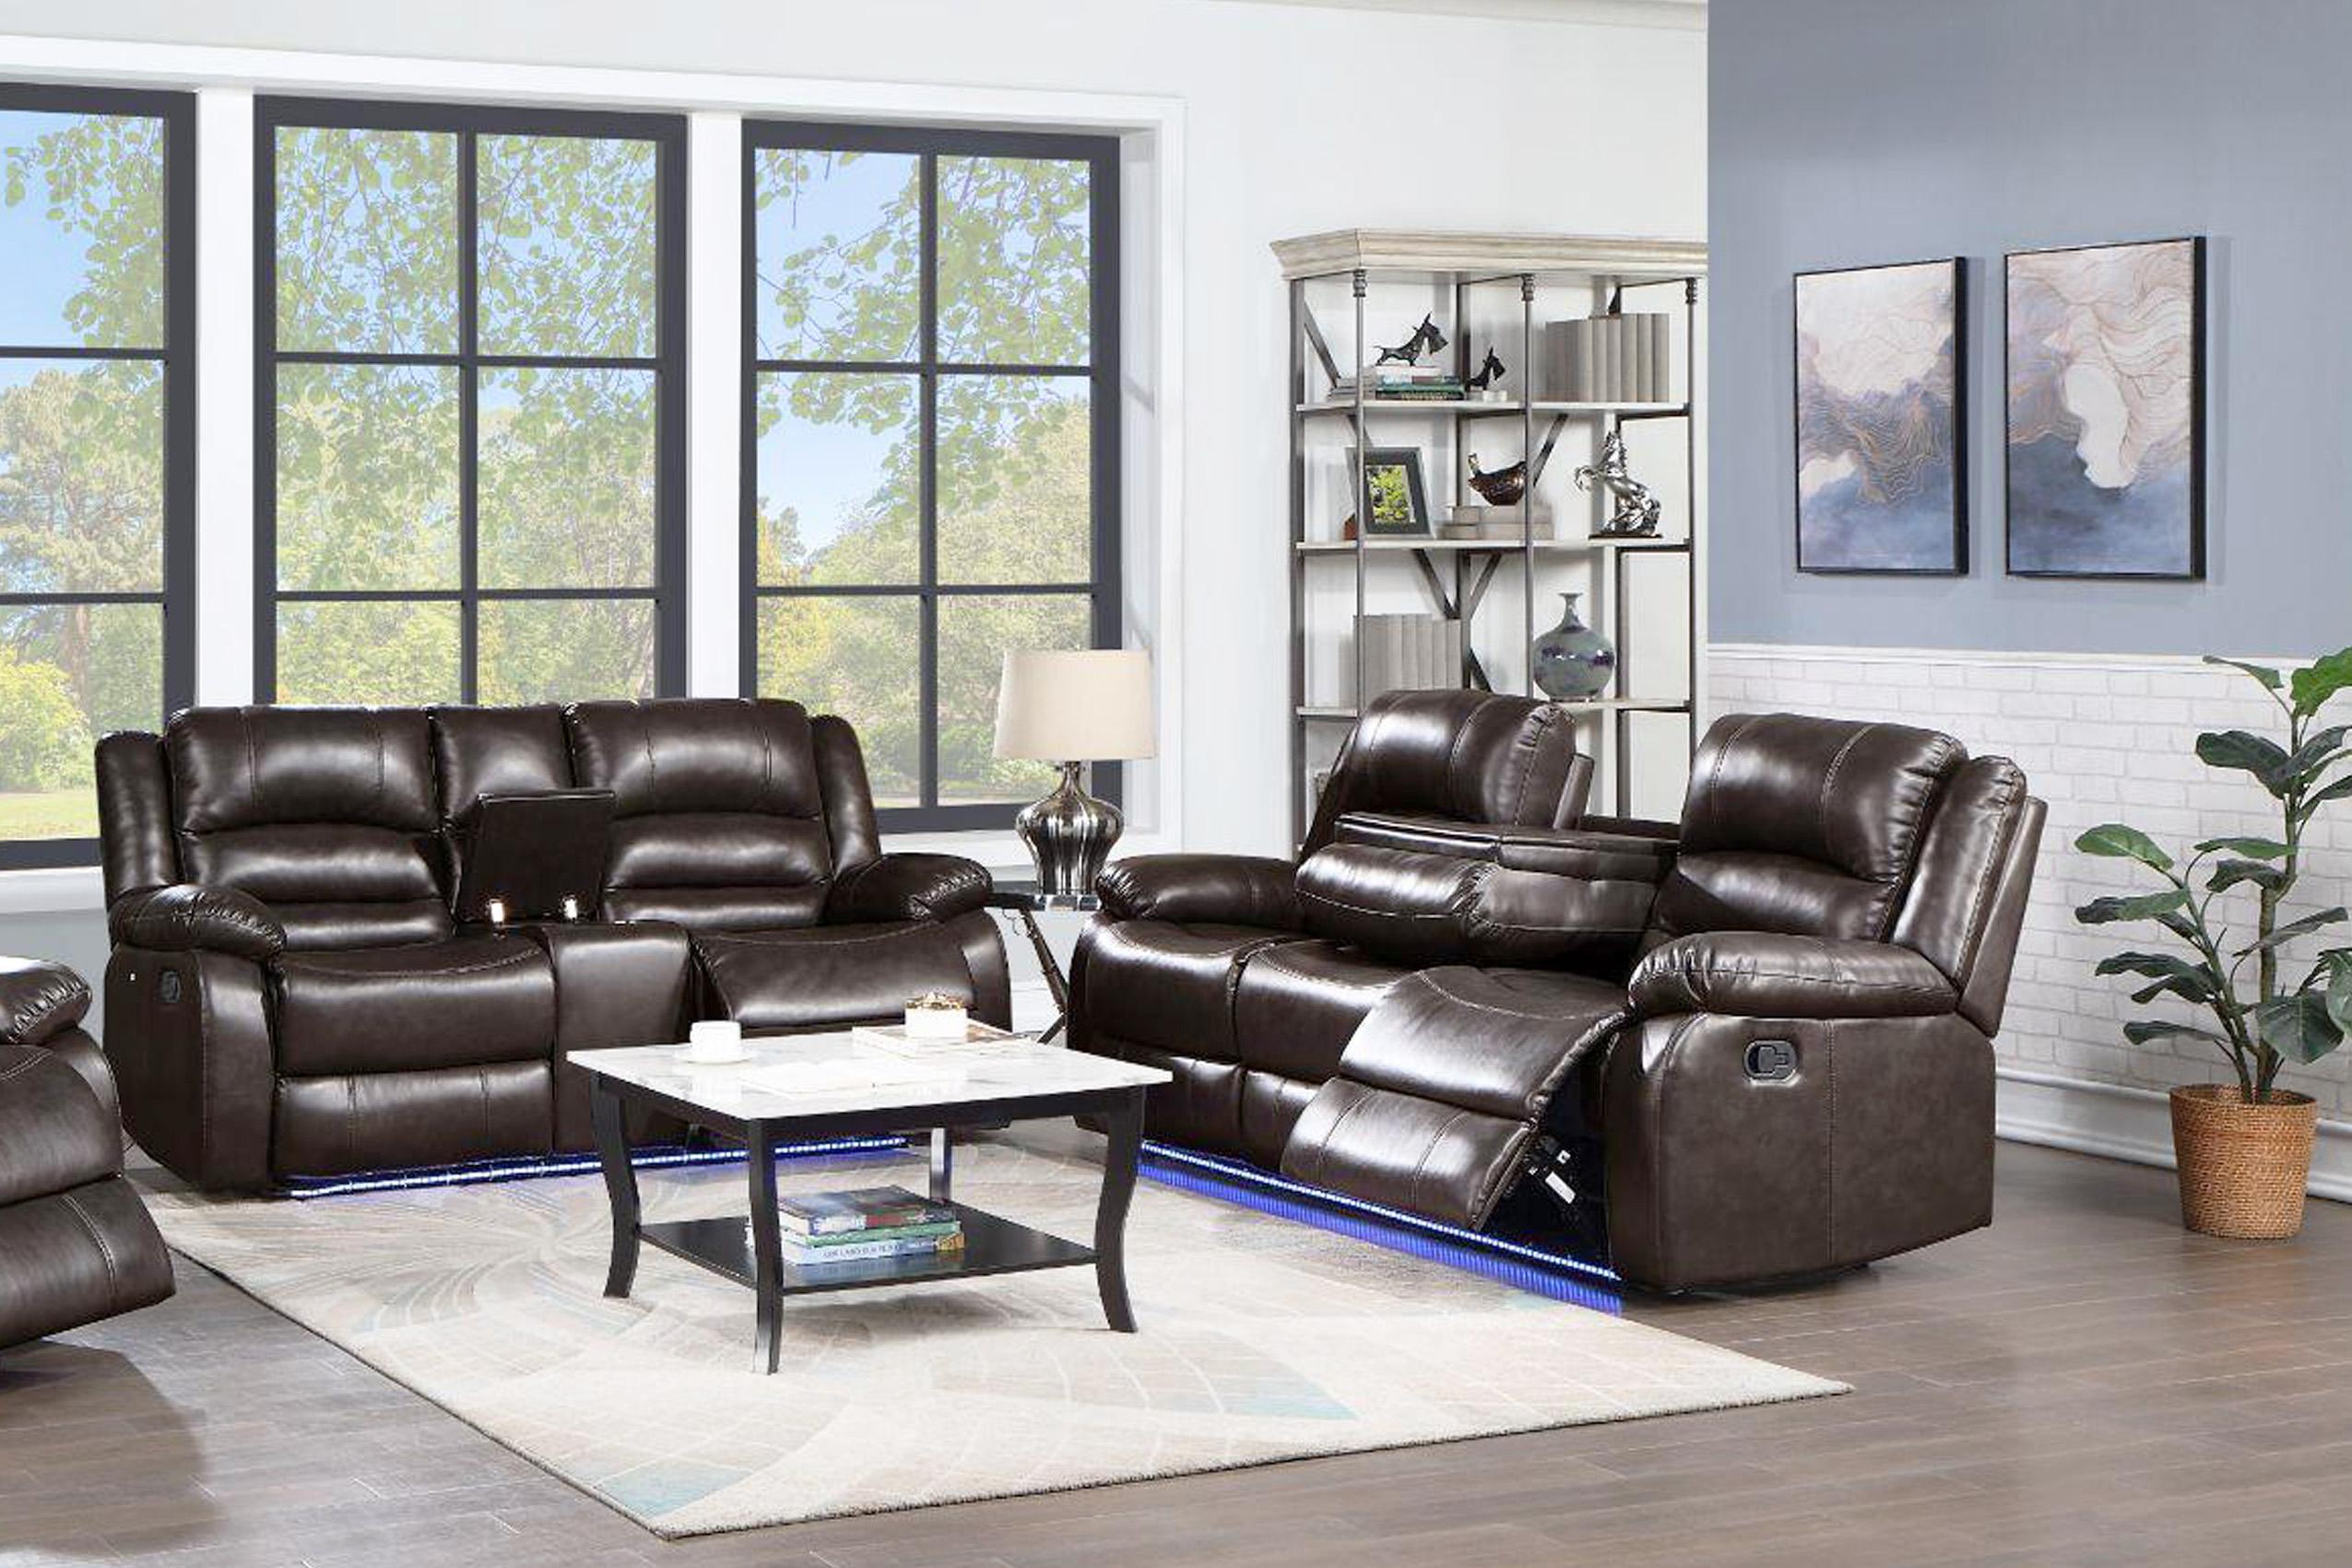 Galaxy Home Furniture MARTIN BR Recliner Sofa Set